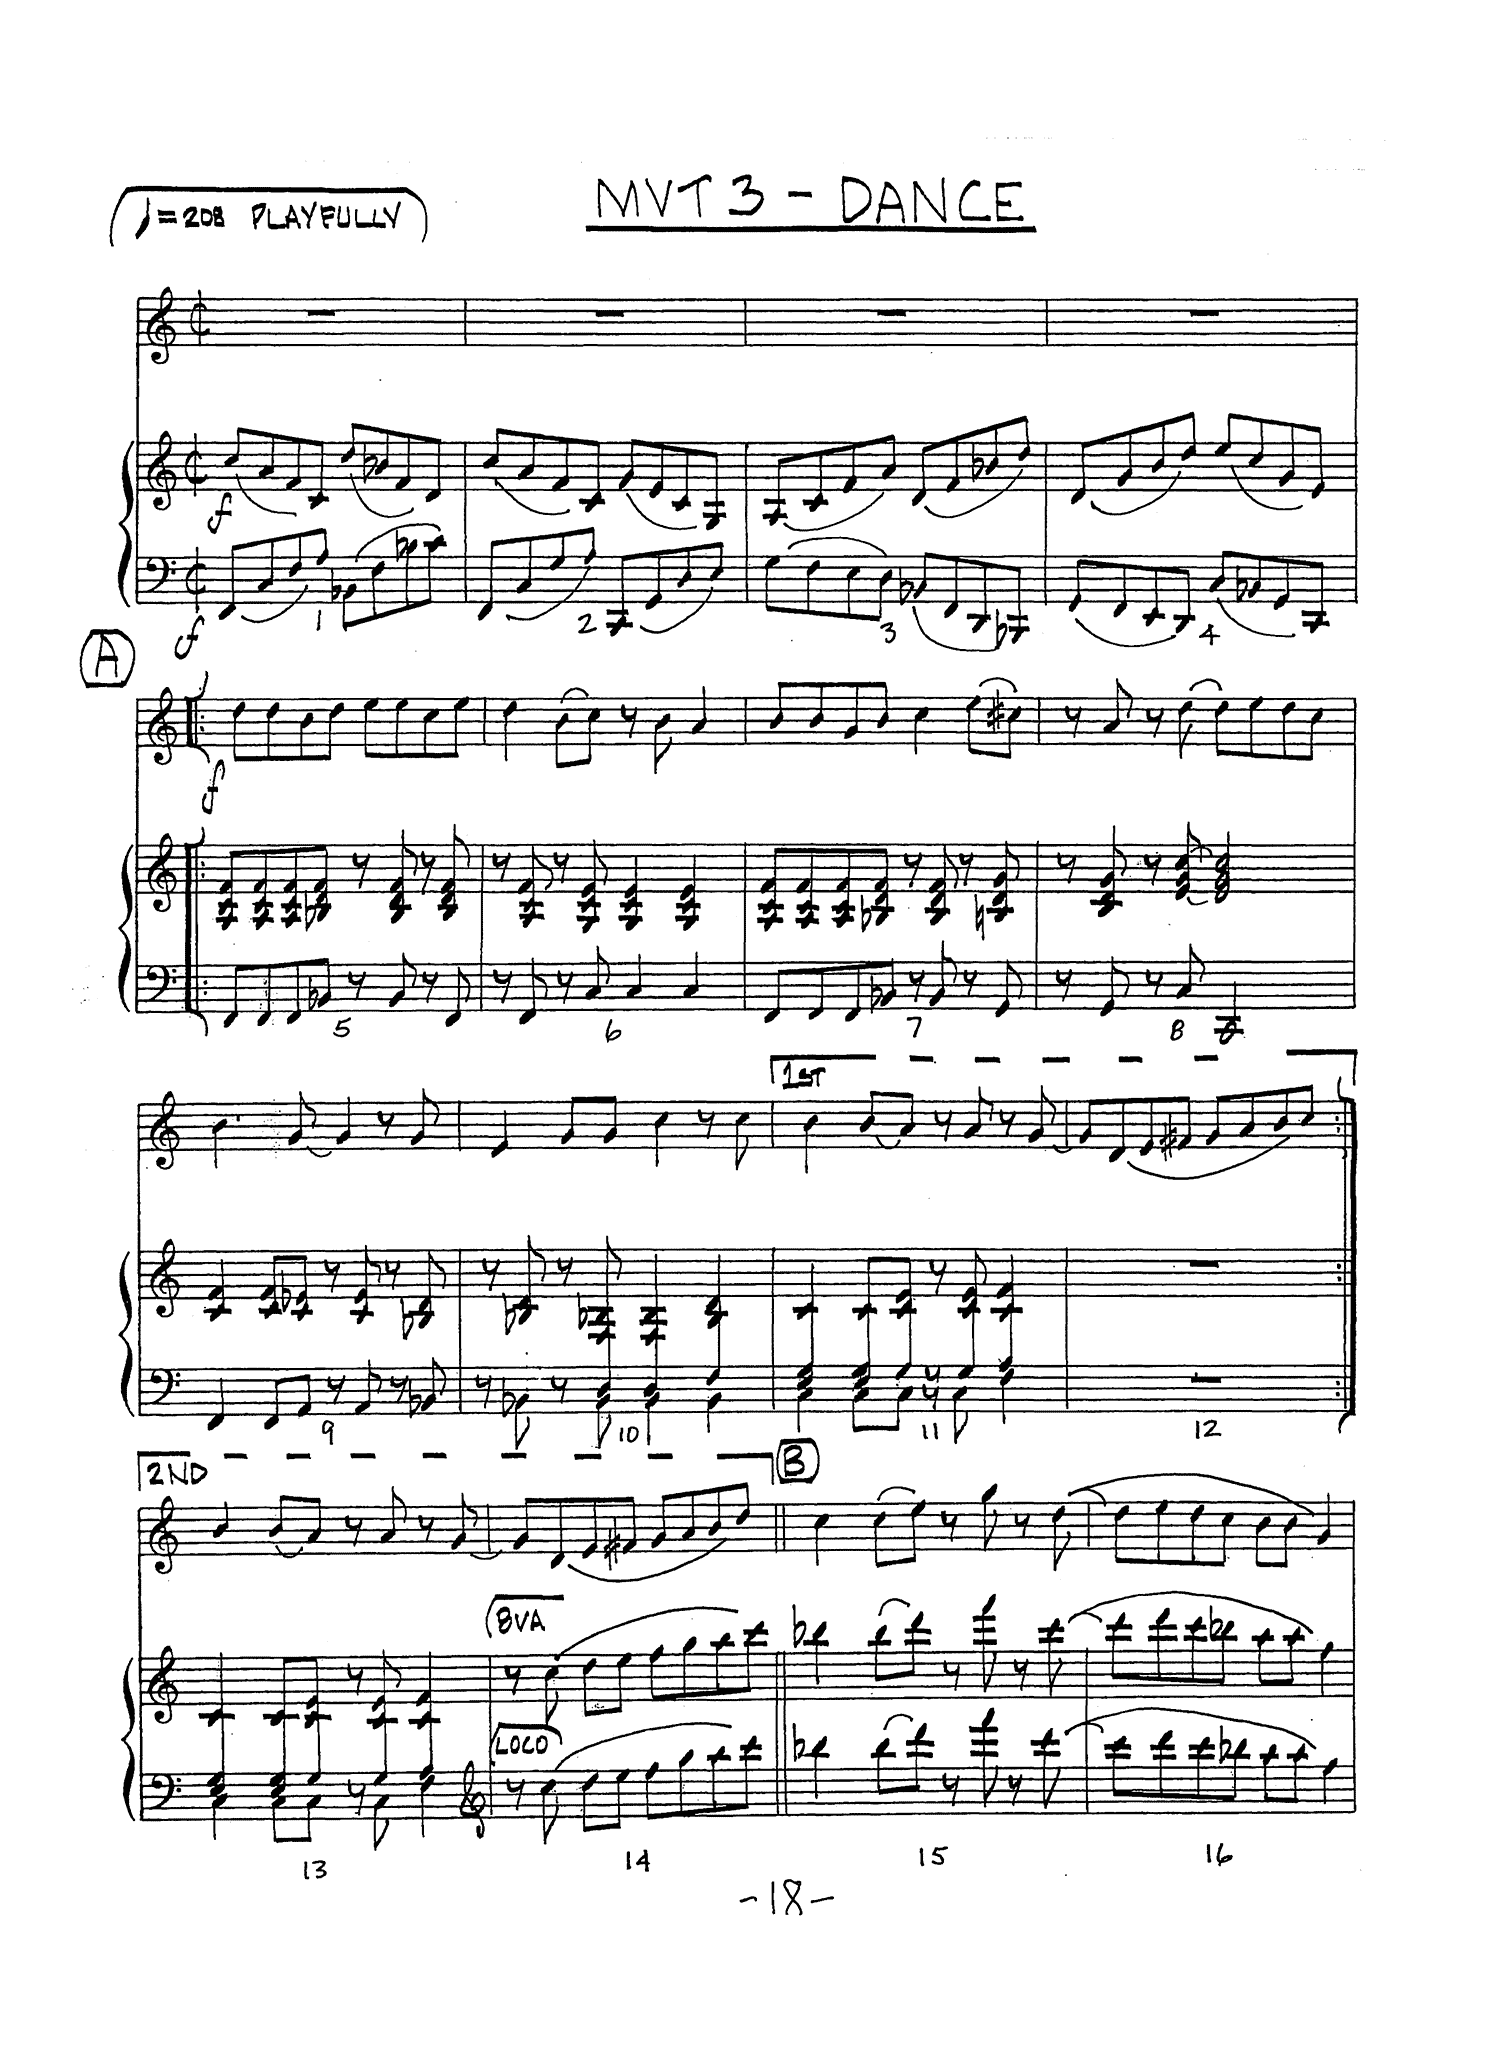 Baker Clarinet Sonata - Movement 3